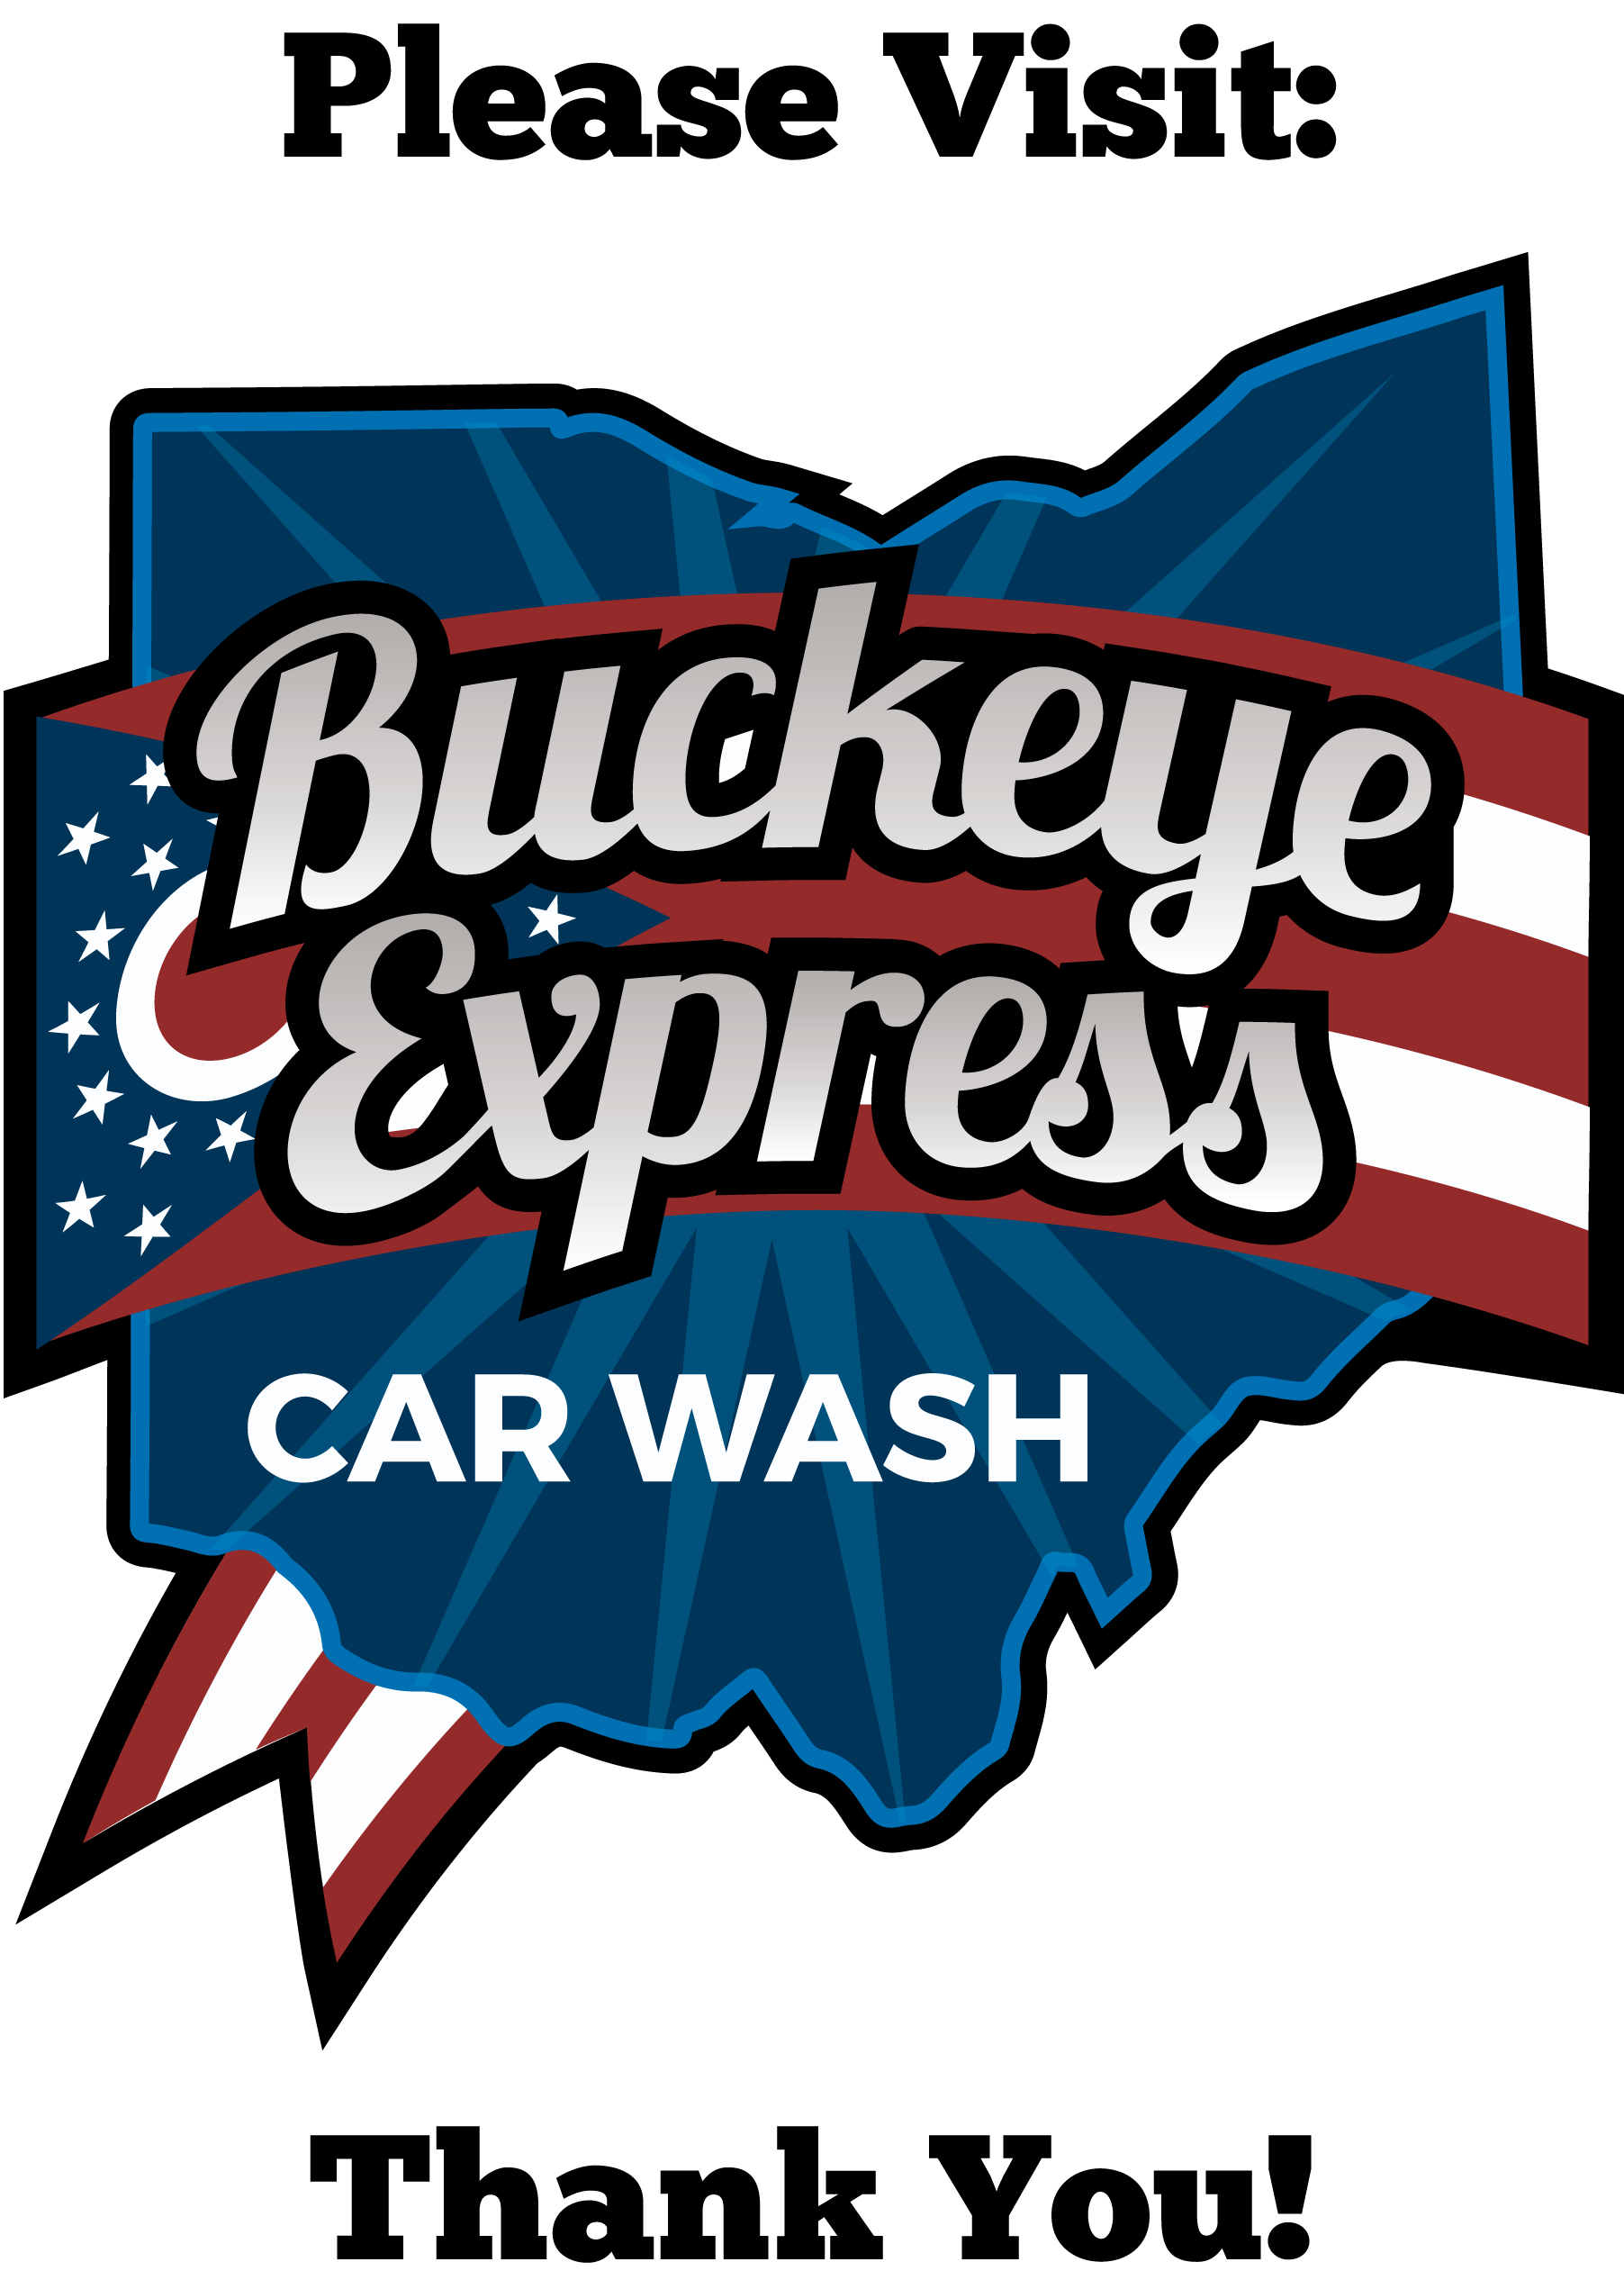 Buckeye Express Car Wash - https://buckeyeexpresscarwash.com